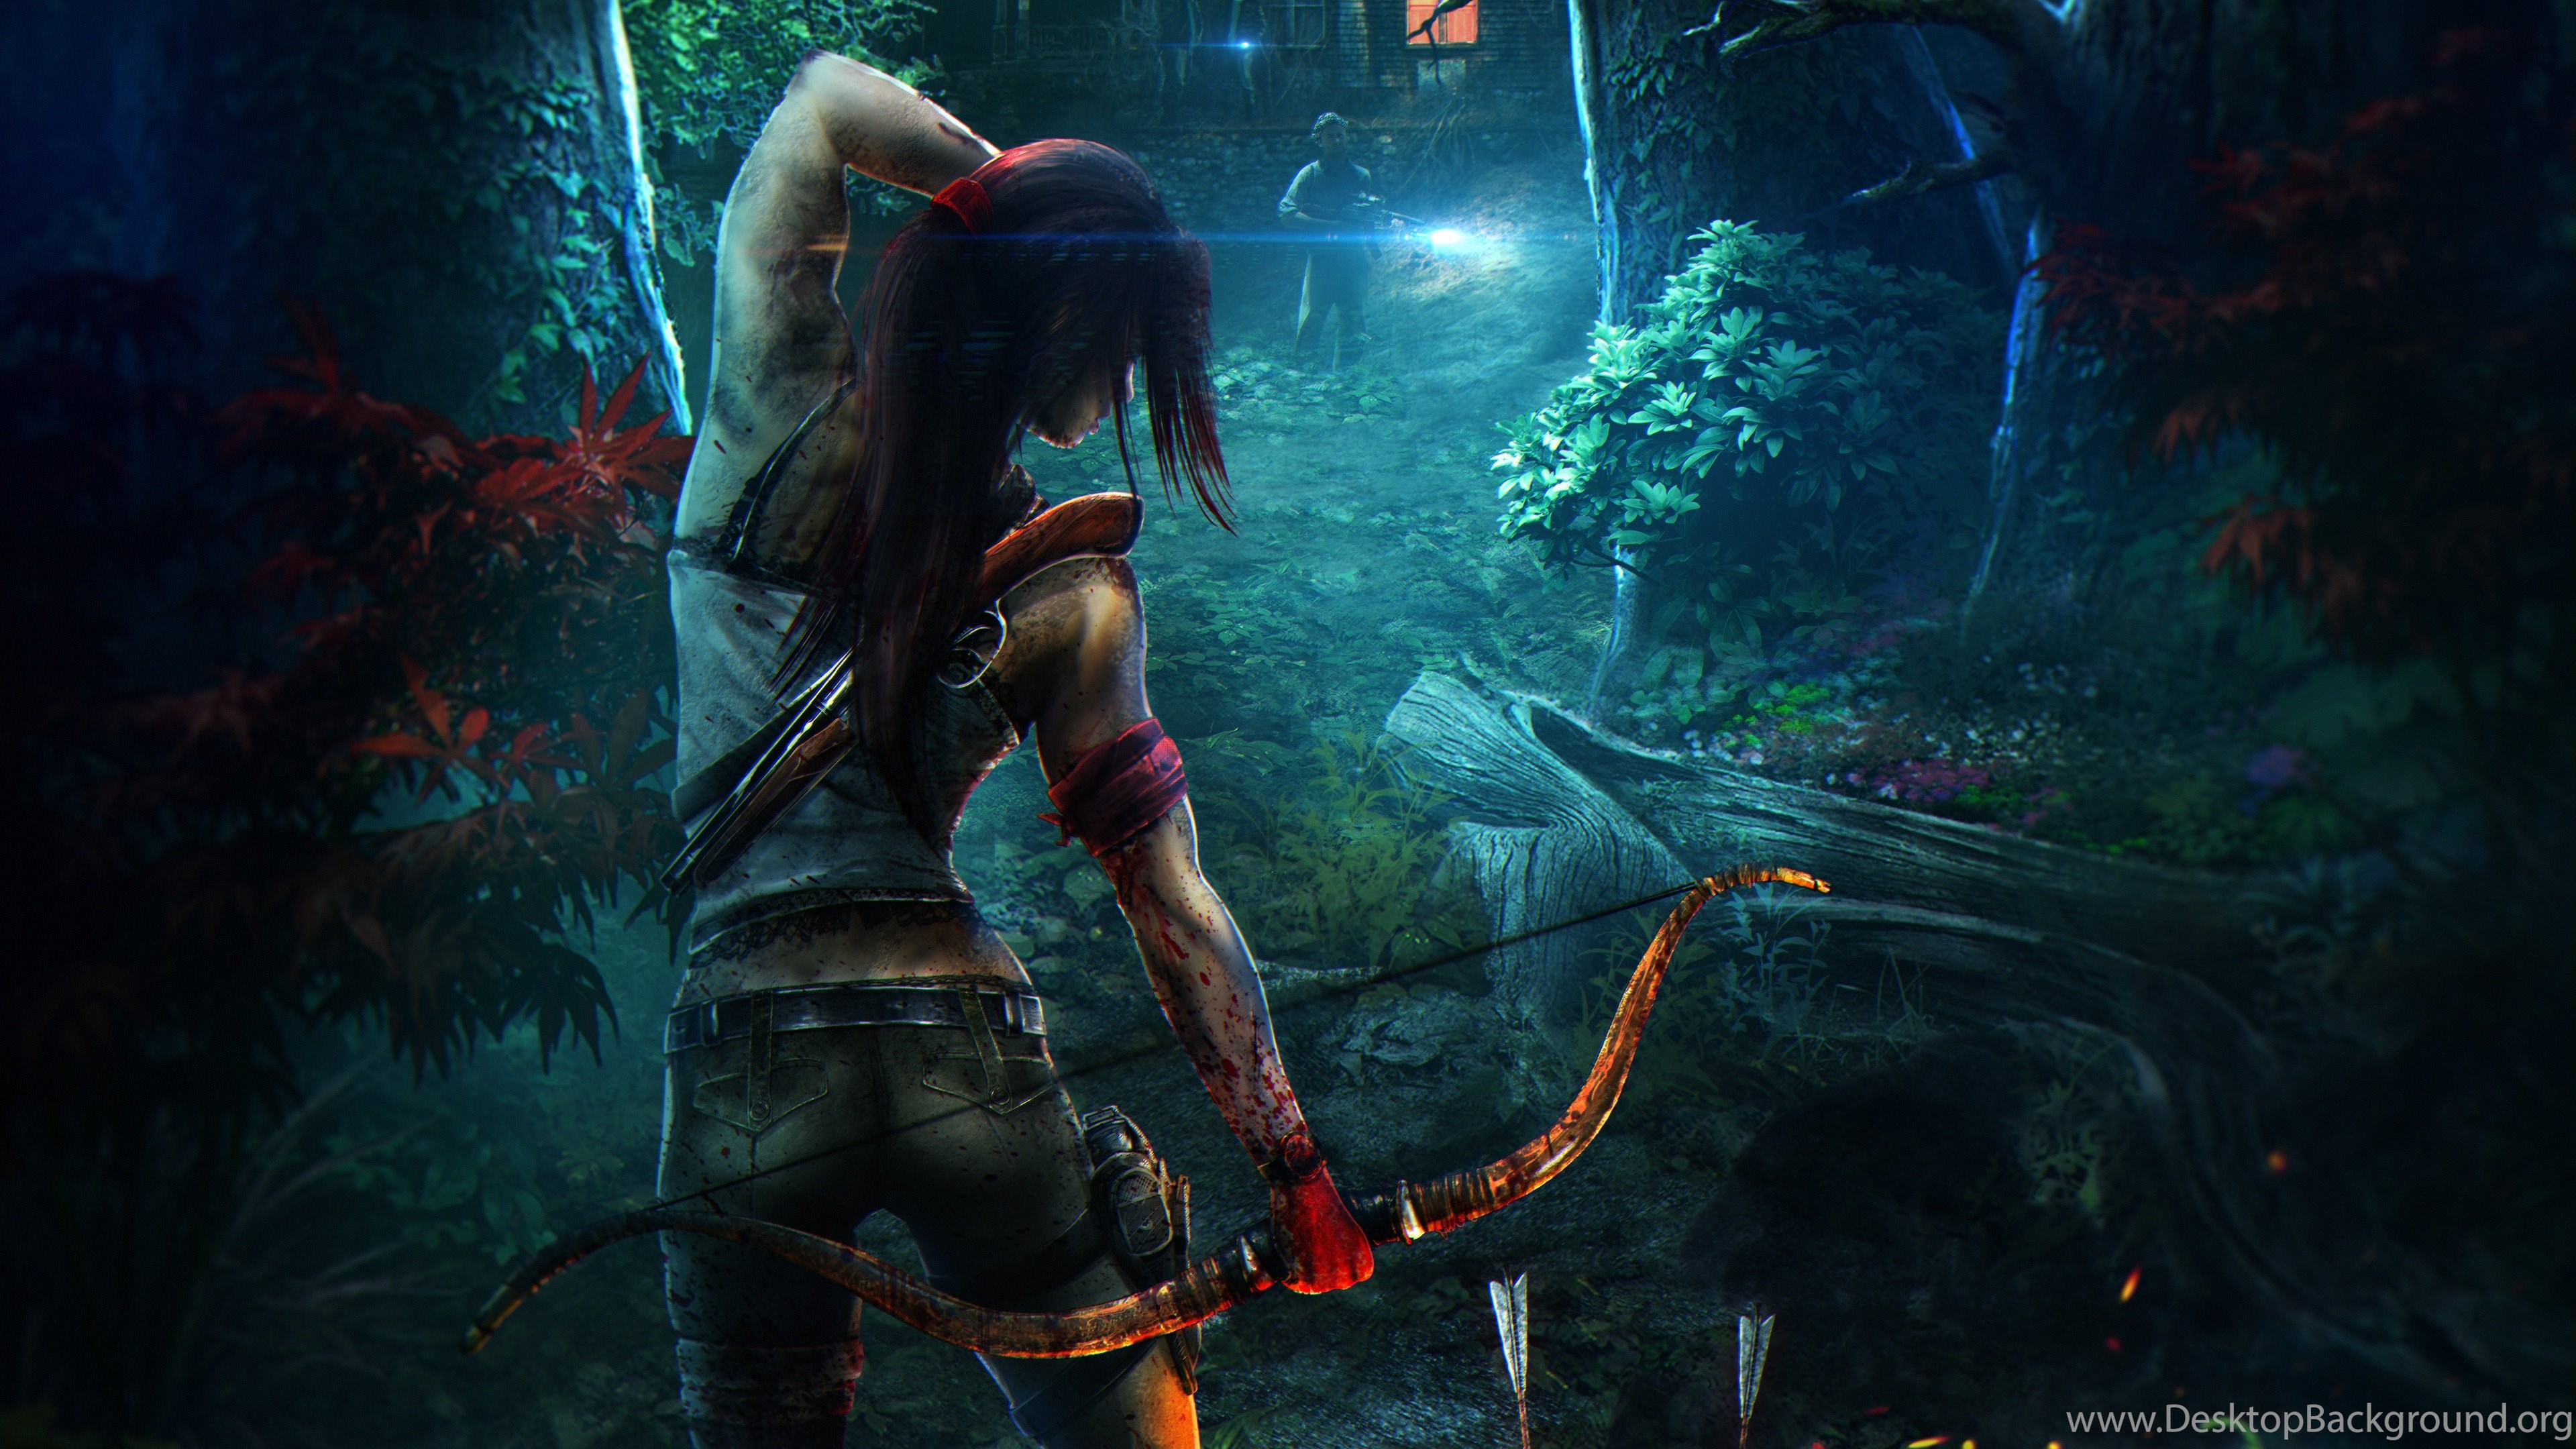 Wallpaper: Tomb Raider, Fantasy Girl, Video Game, Arrow, Forest. Desktop Background